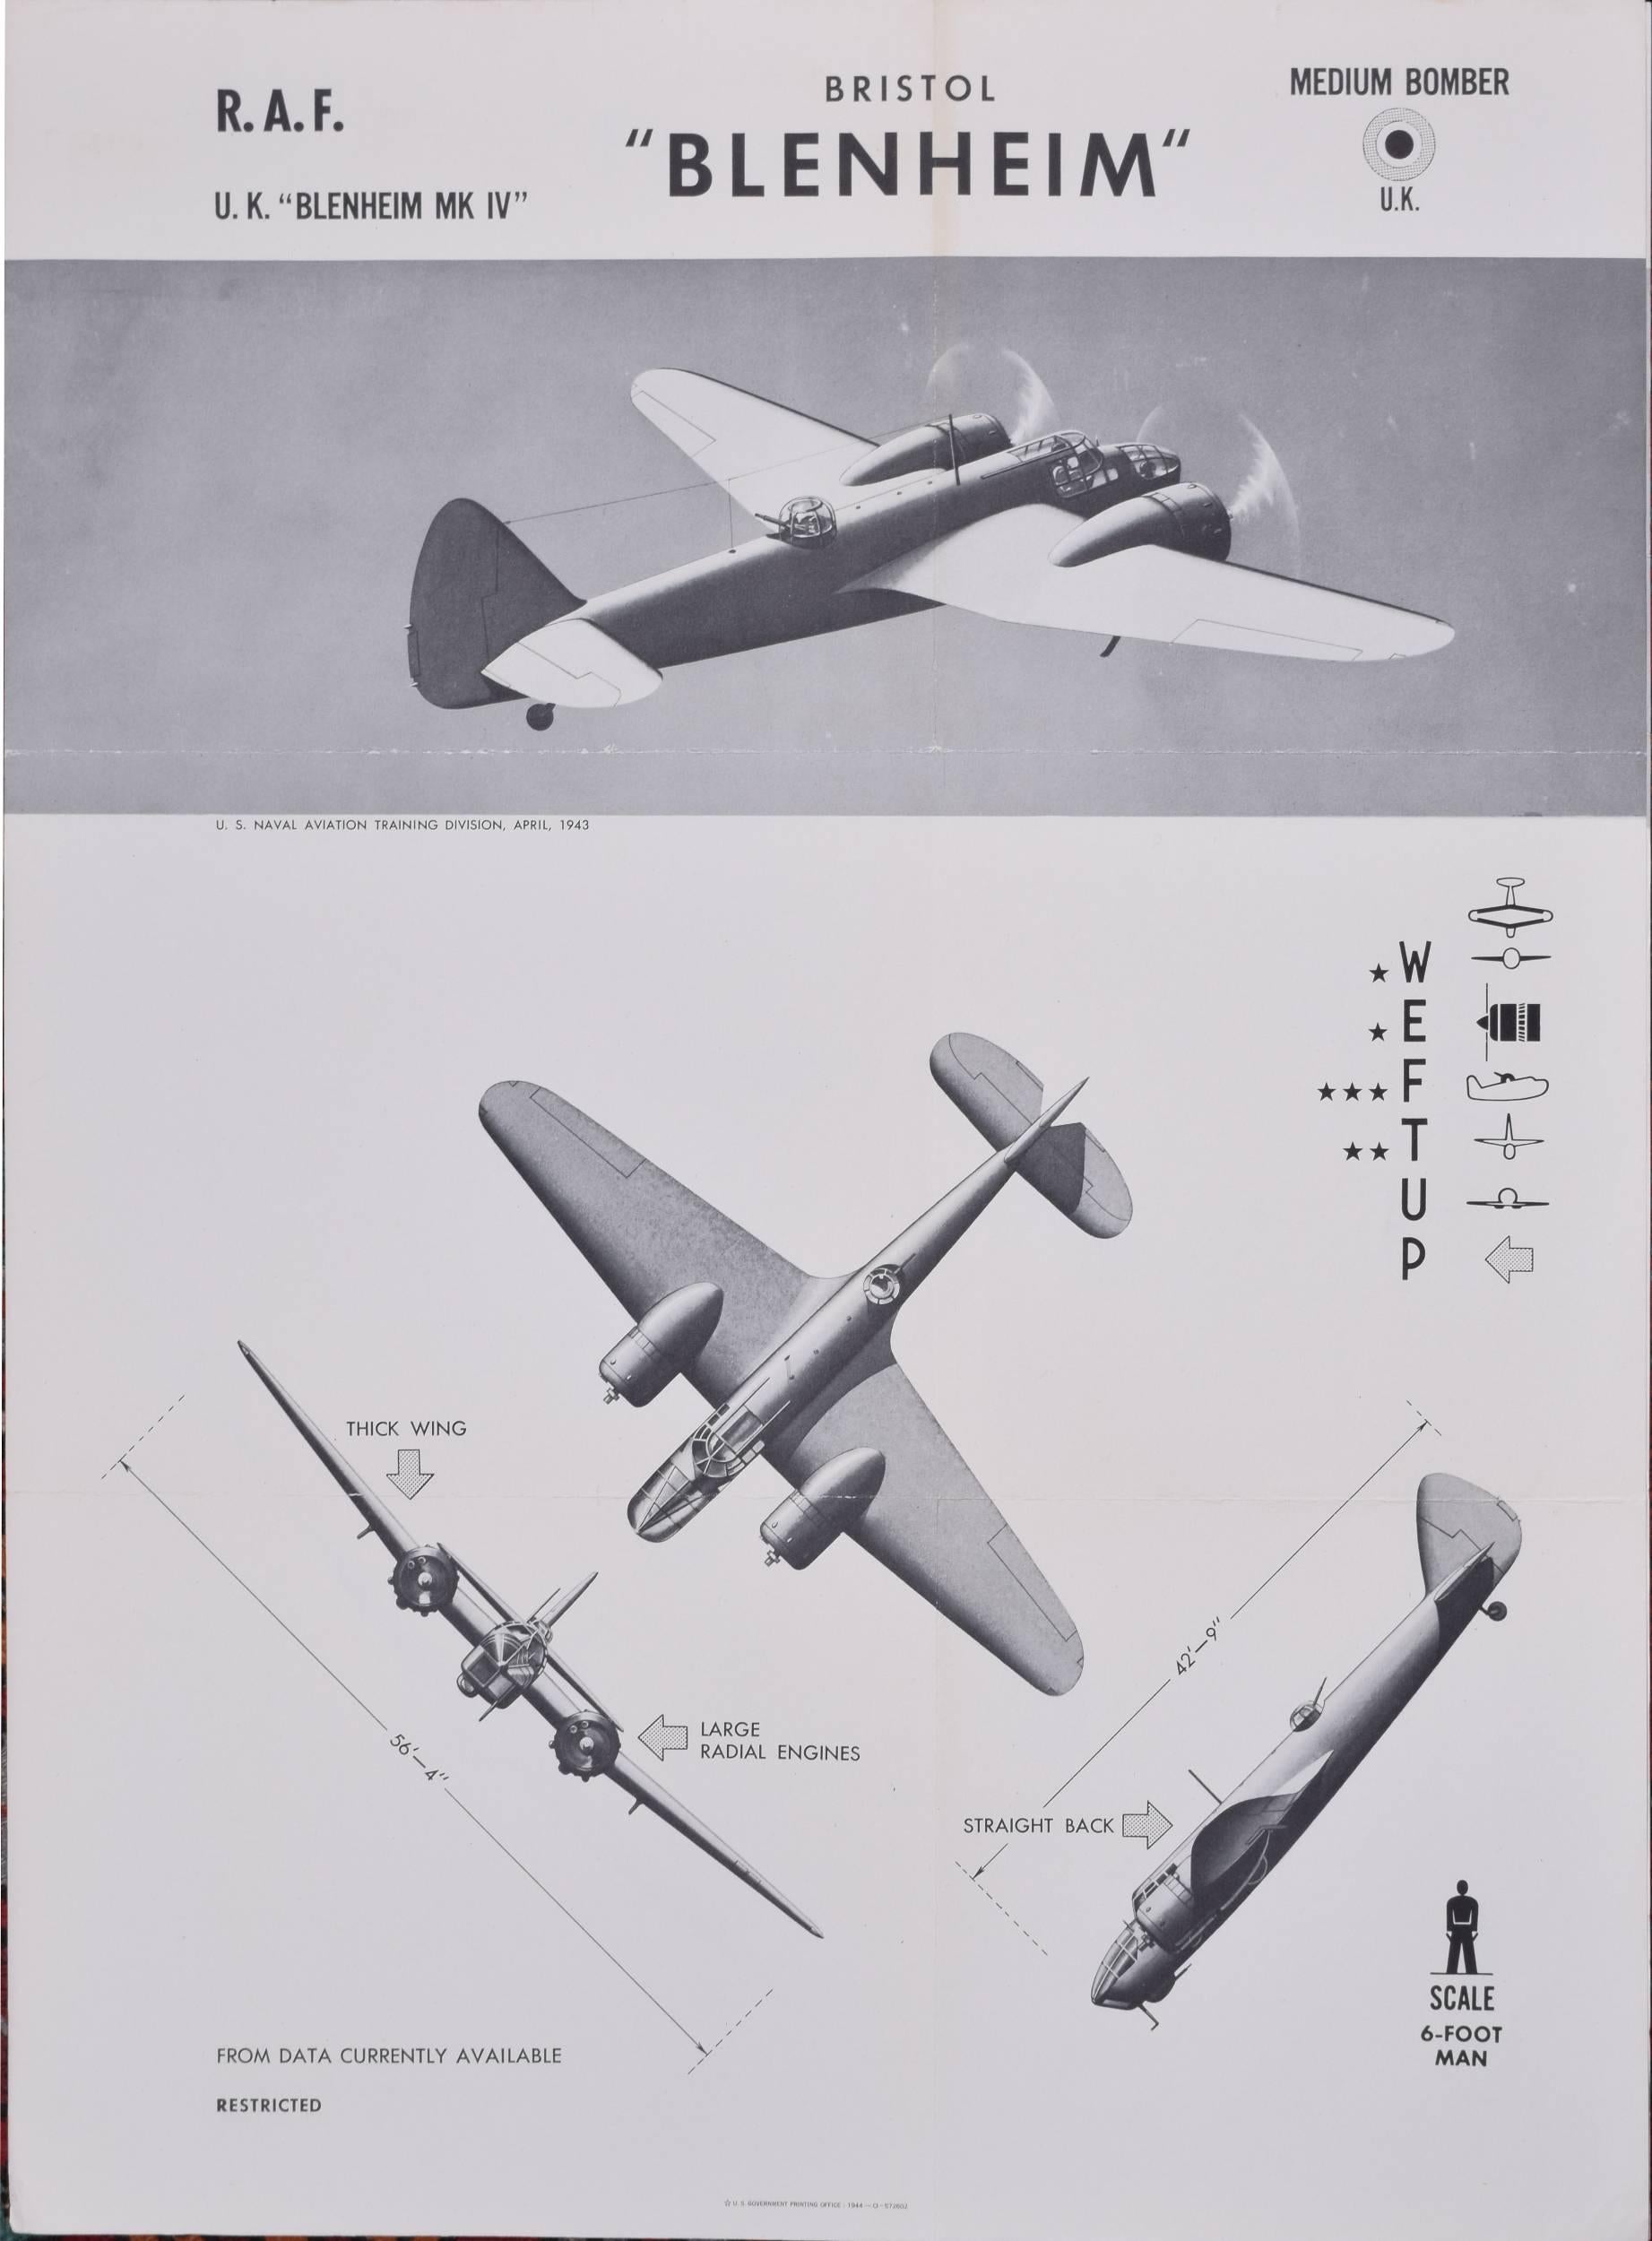 1943 Royal Air Force Bristol Blenheim Poster, US Naval Aviation Training Division